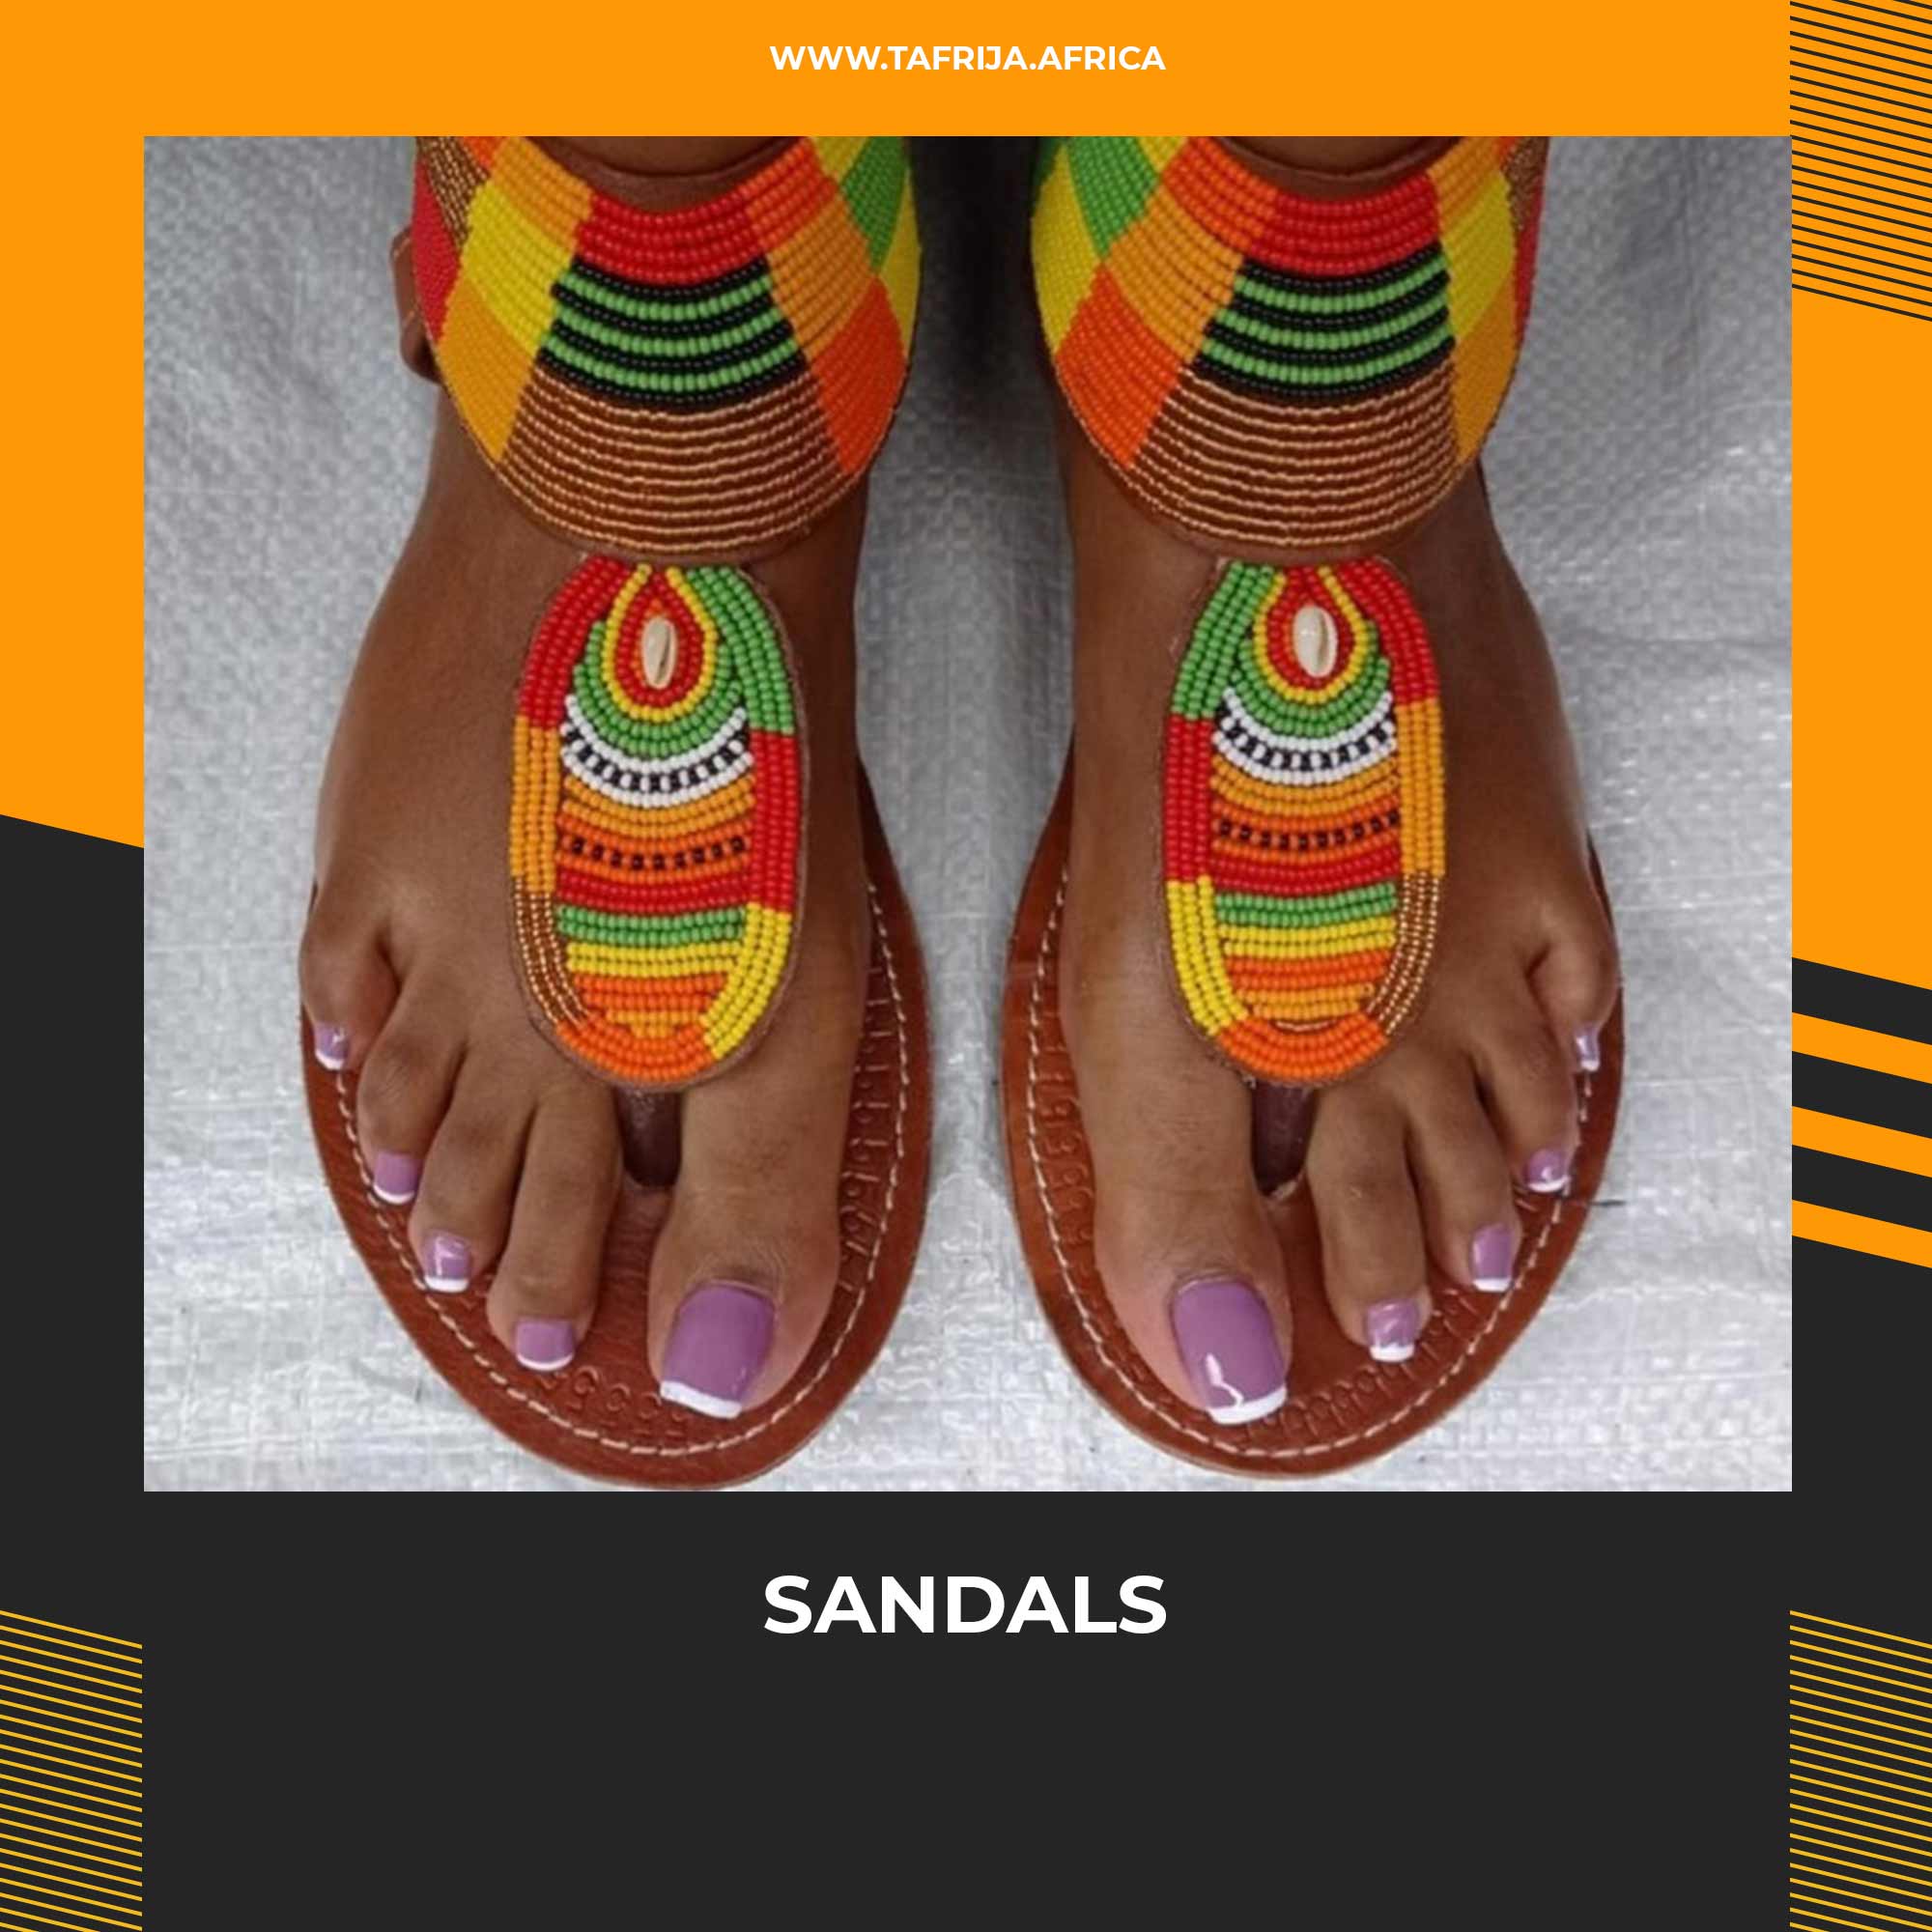 Sandals and flip flops